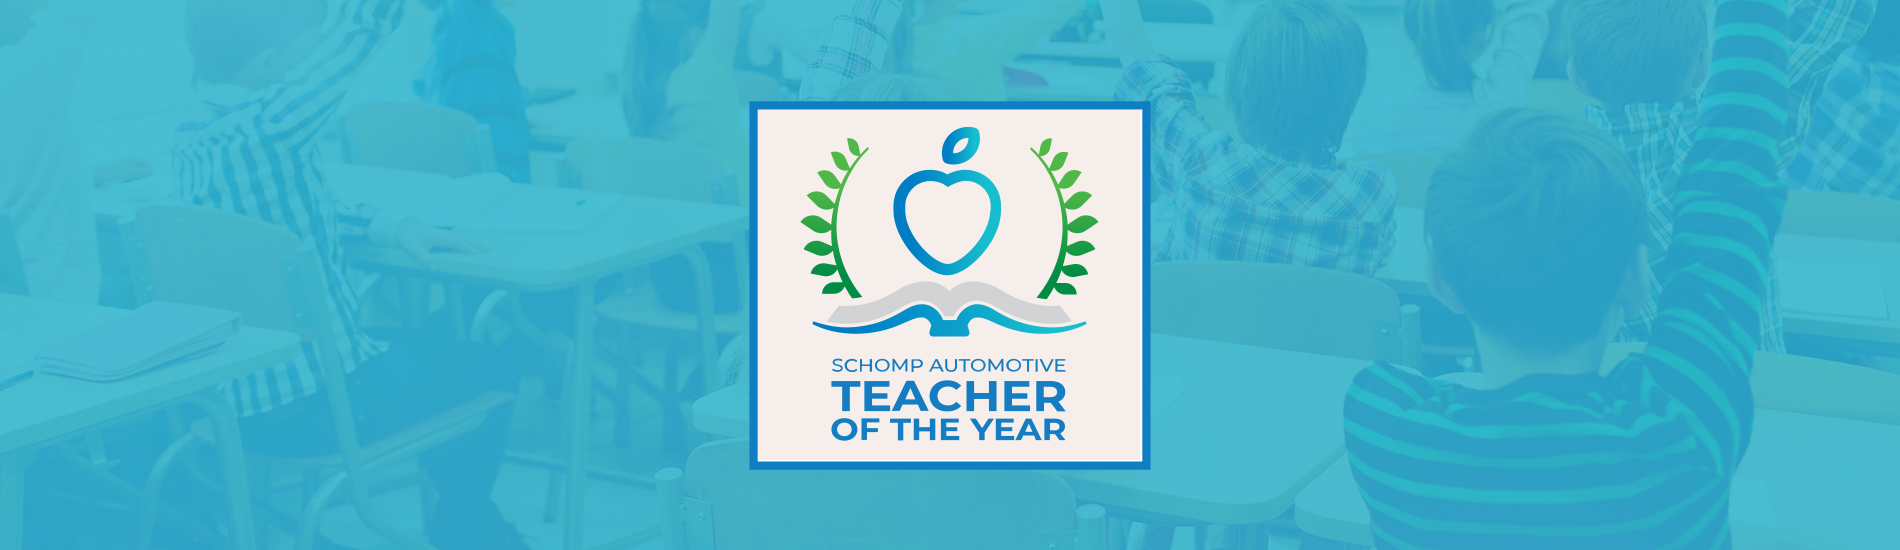 Schomp Automotive Teacher of the Year | Children in Classroom